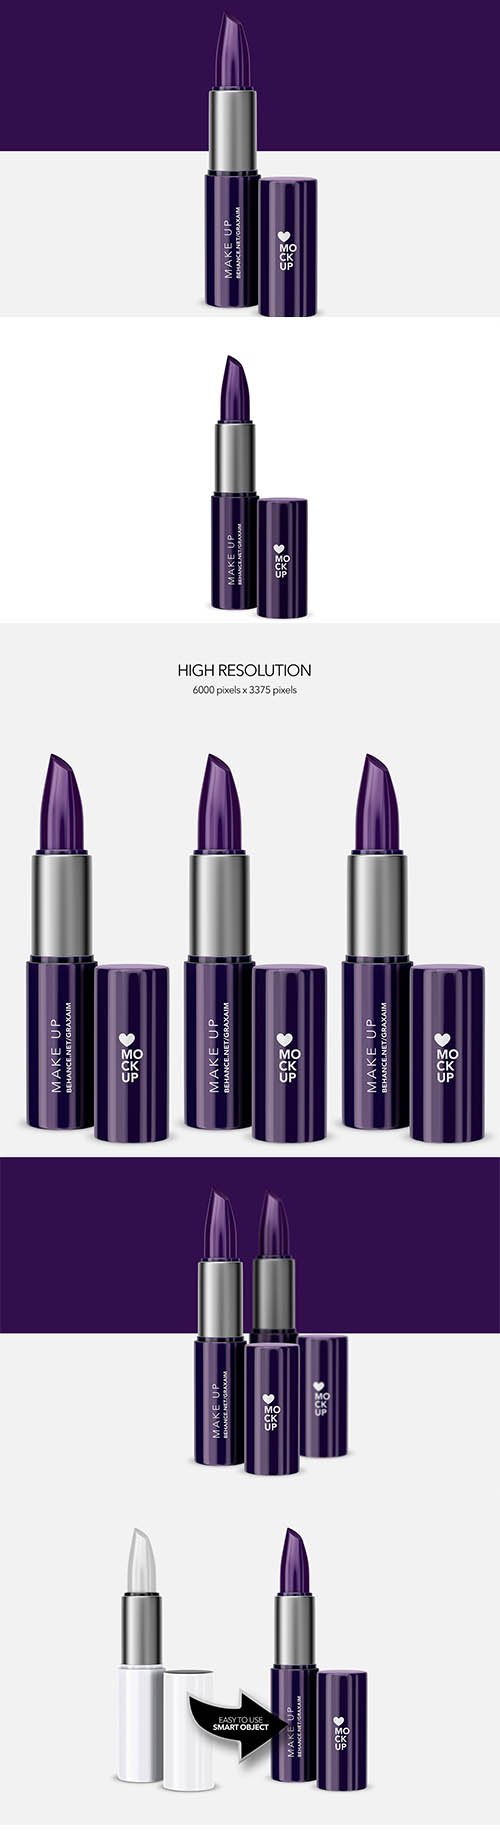 Cosmetics Lipstick Mockup - Make up - 3702561